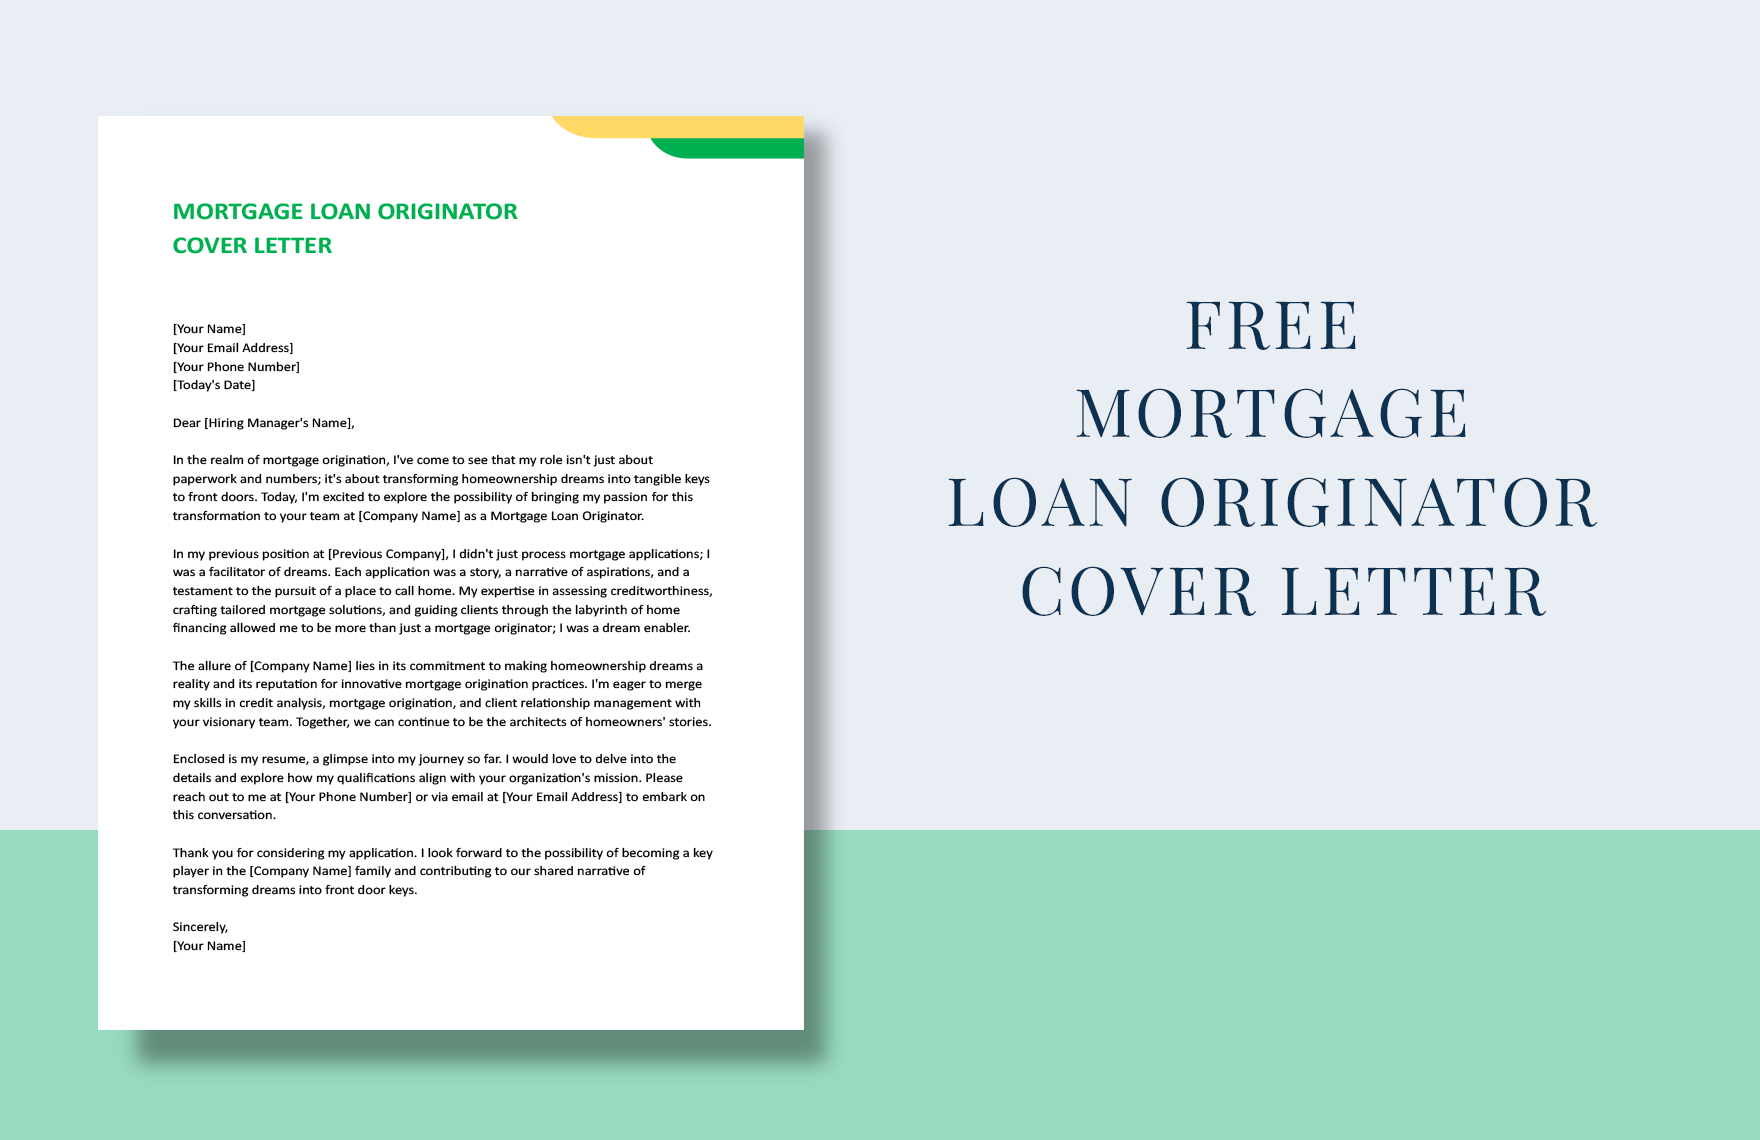 Mortgage Loan Originator Cover Letter in Word, Google Docs